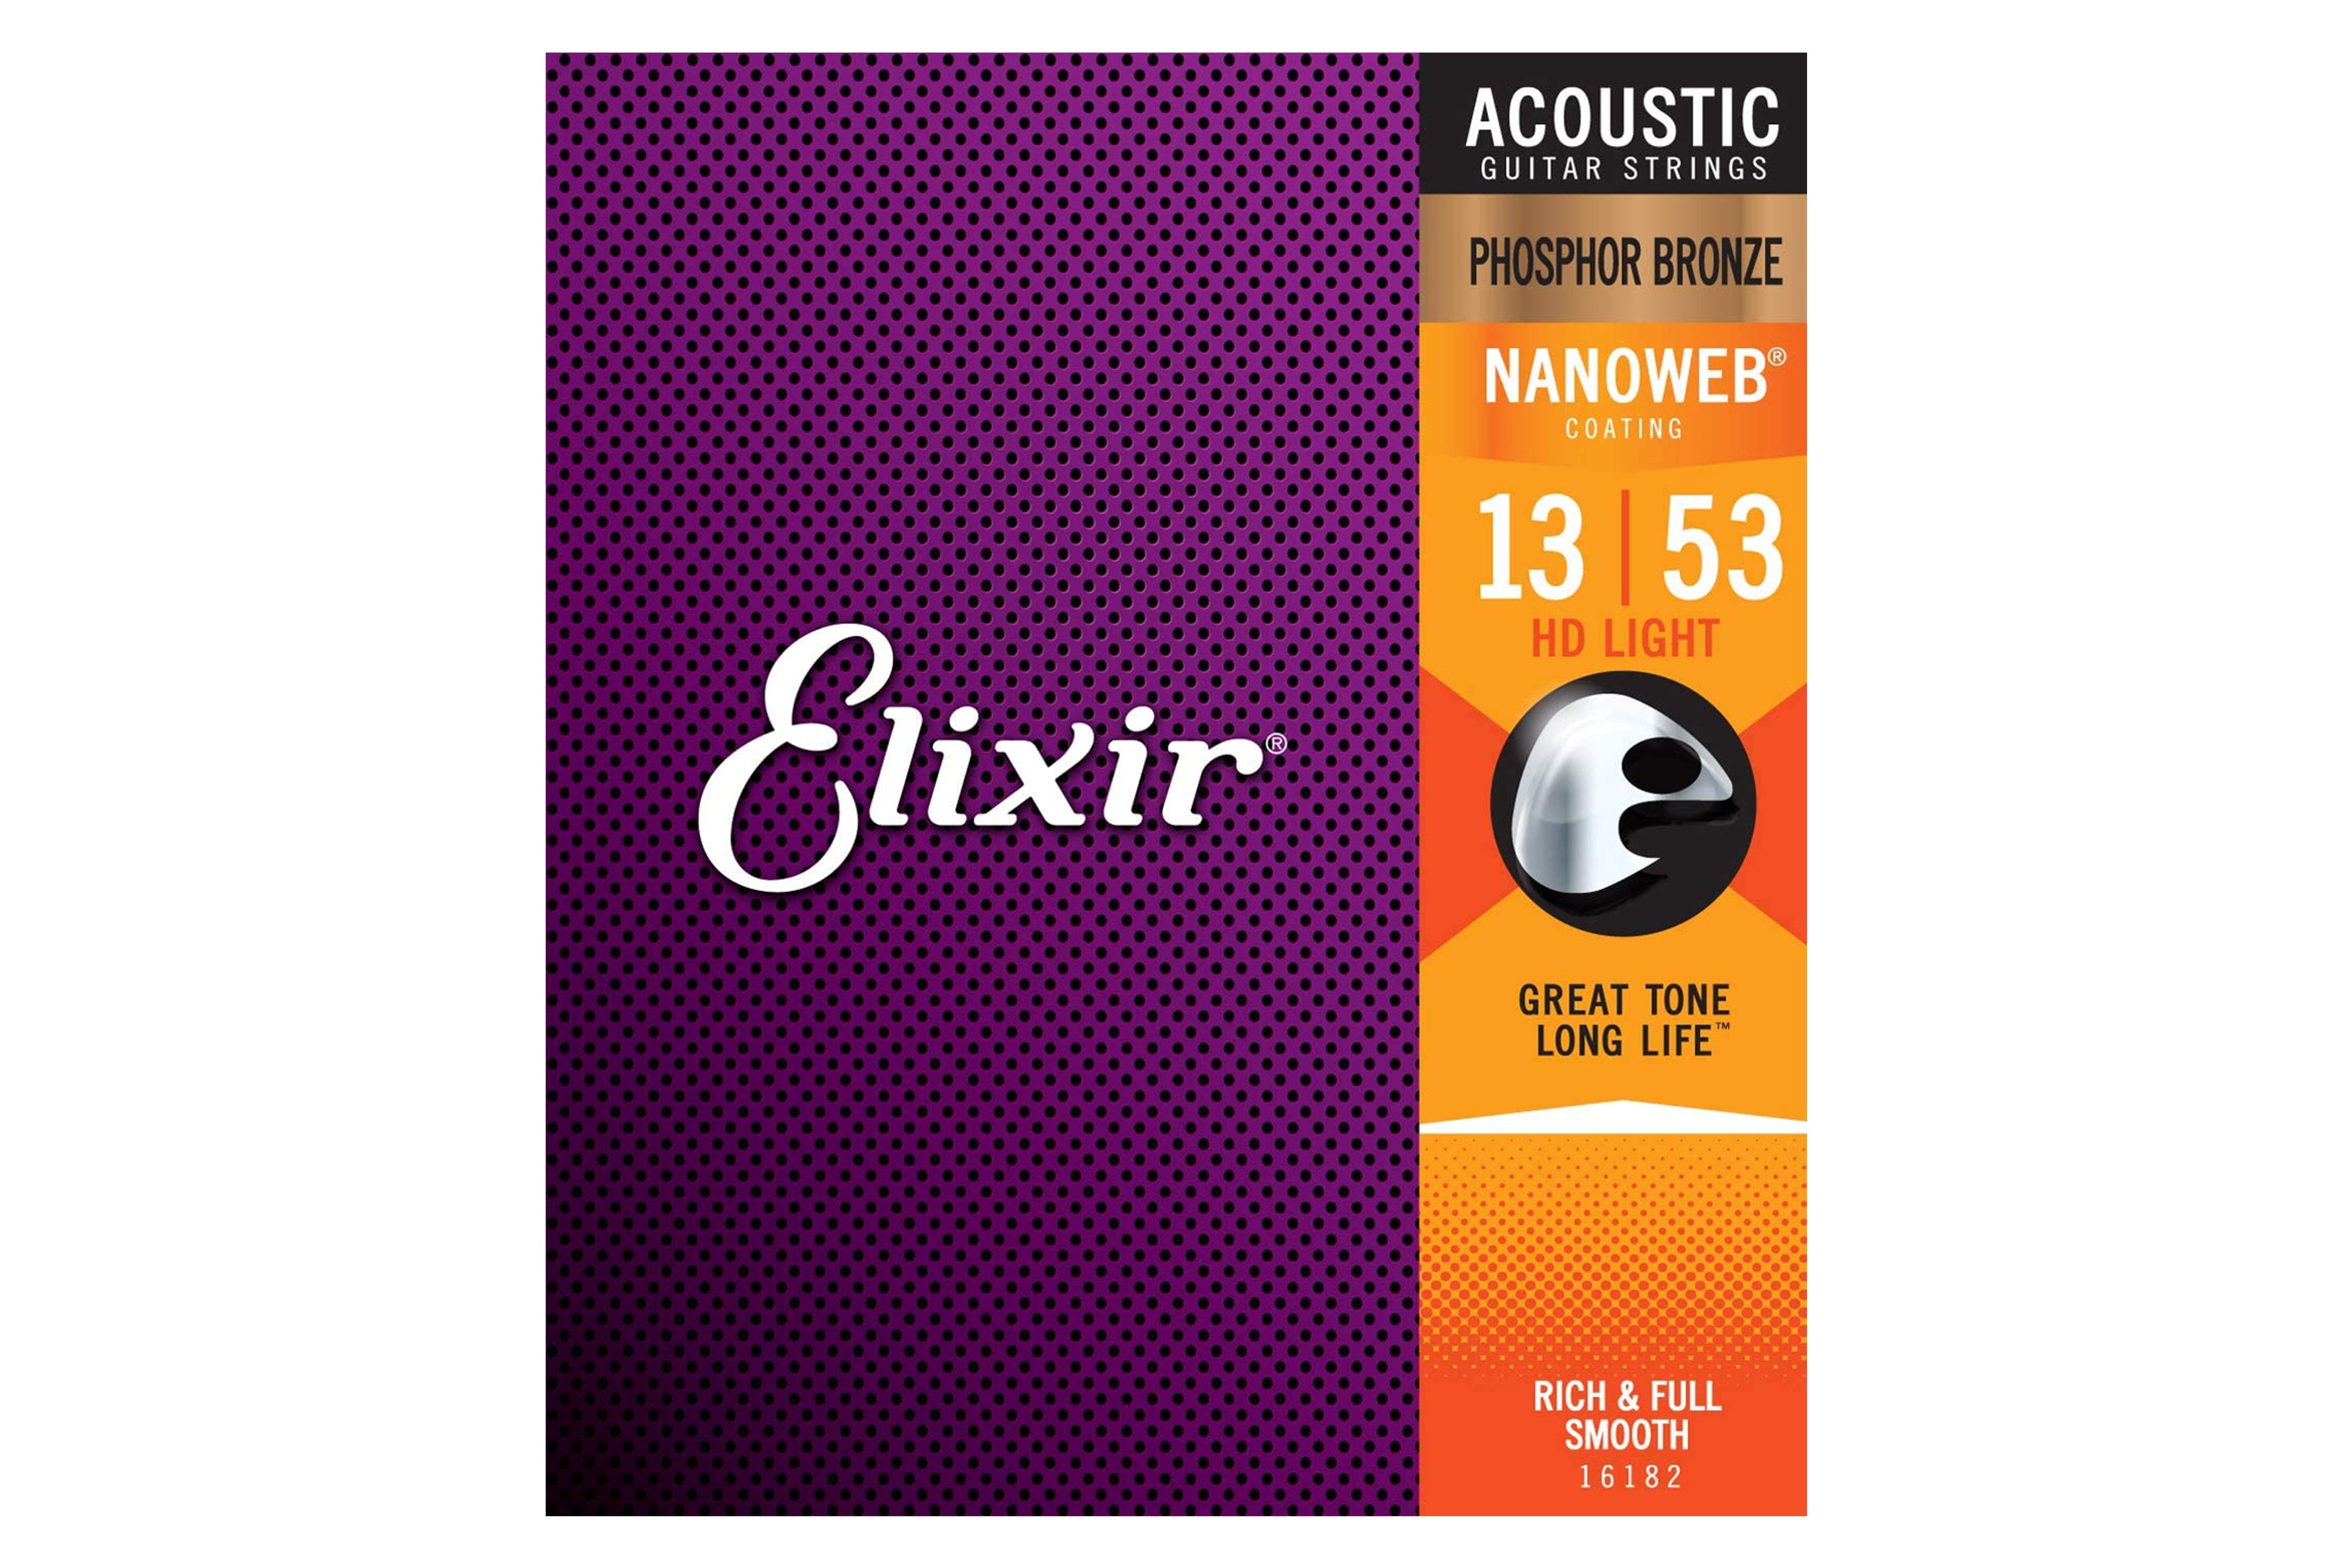 Elixir 16182 Phosphor Bronze With Nanoweb Coating Acoustic Guitar Strings - HD Light .013-.053